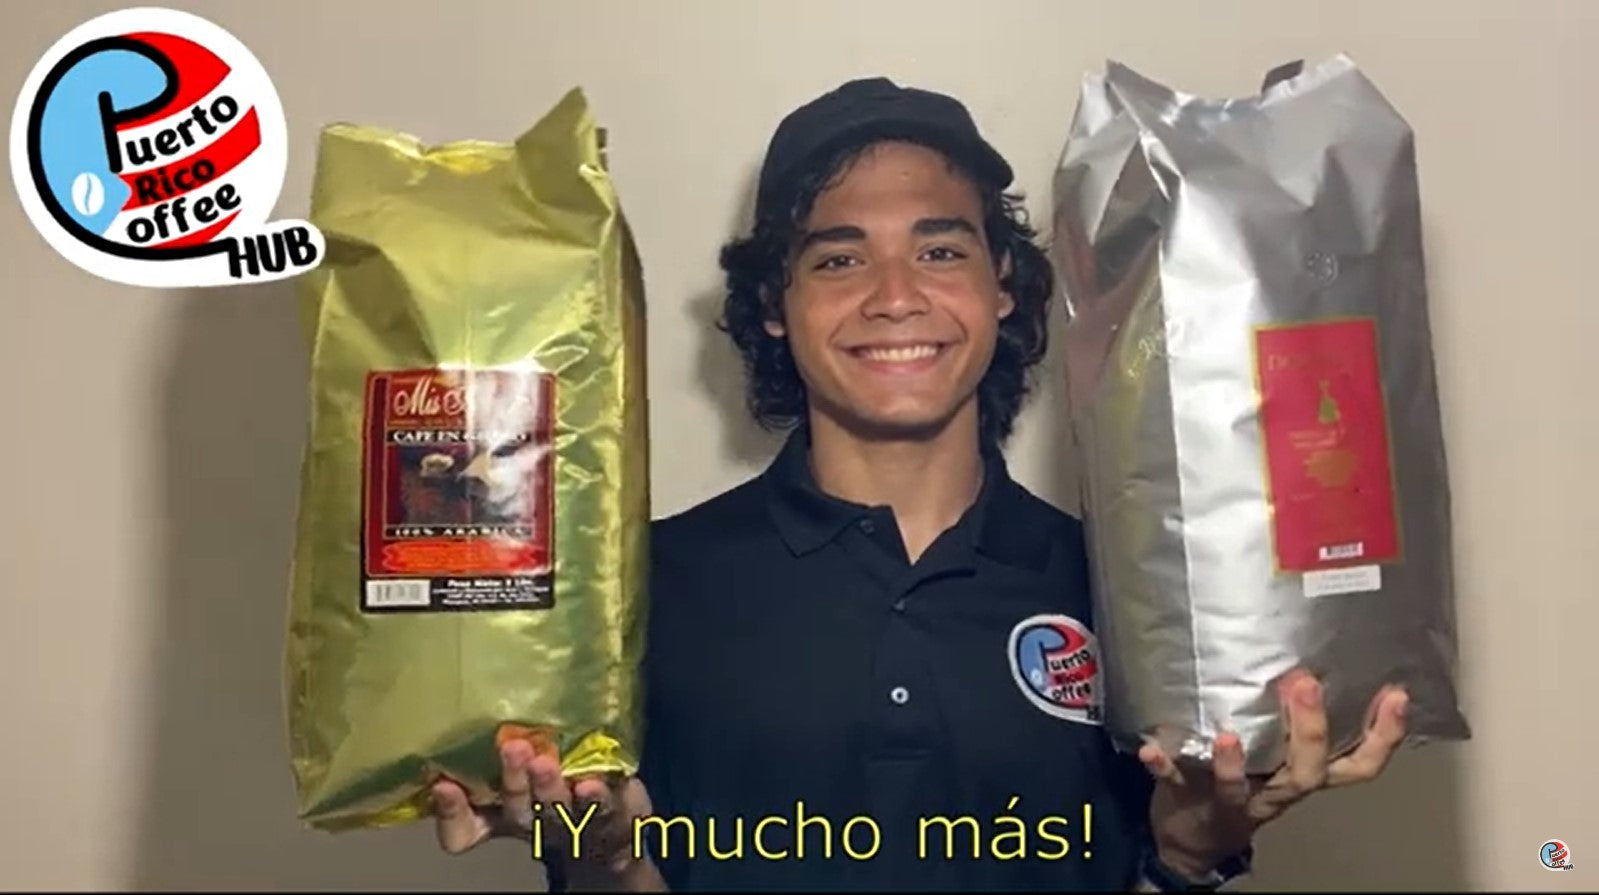 Greca Joshua Montes Coffee Makers – Puerto Rico Coffee Hub